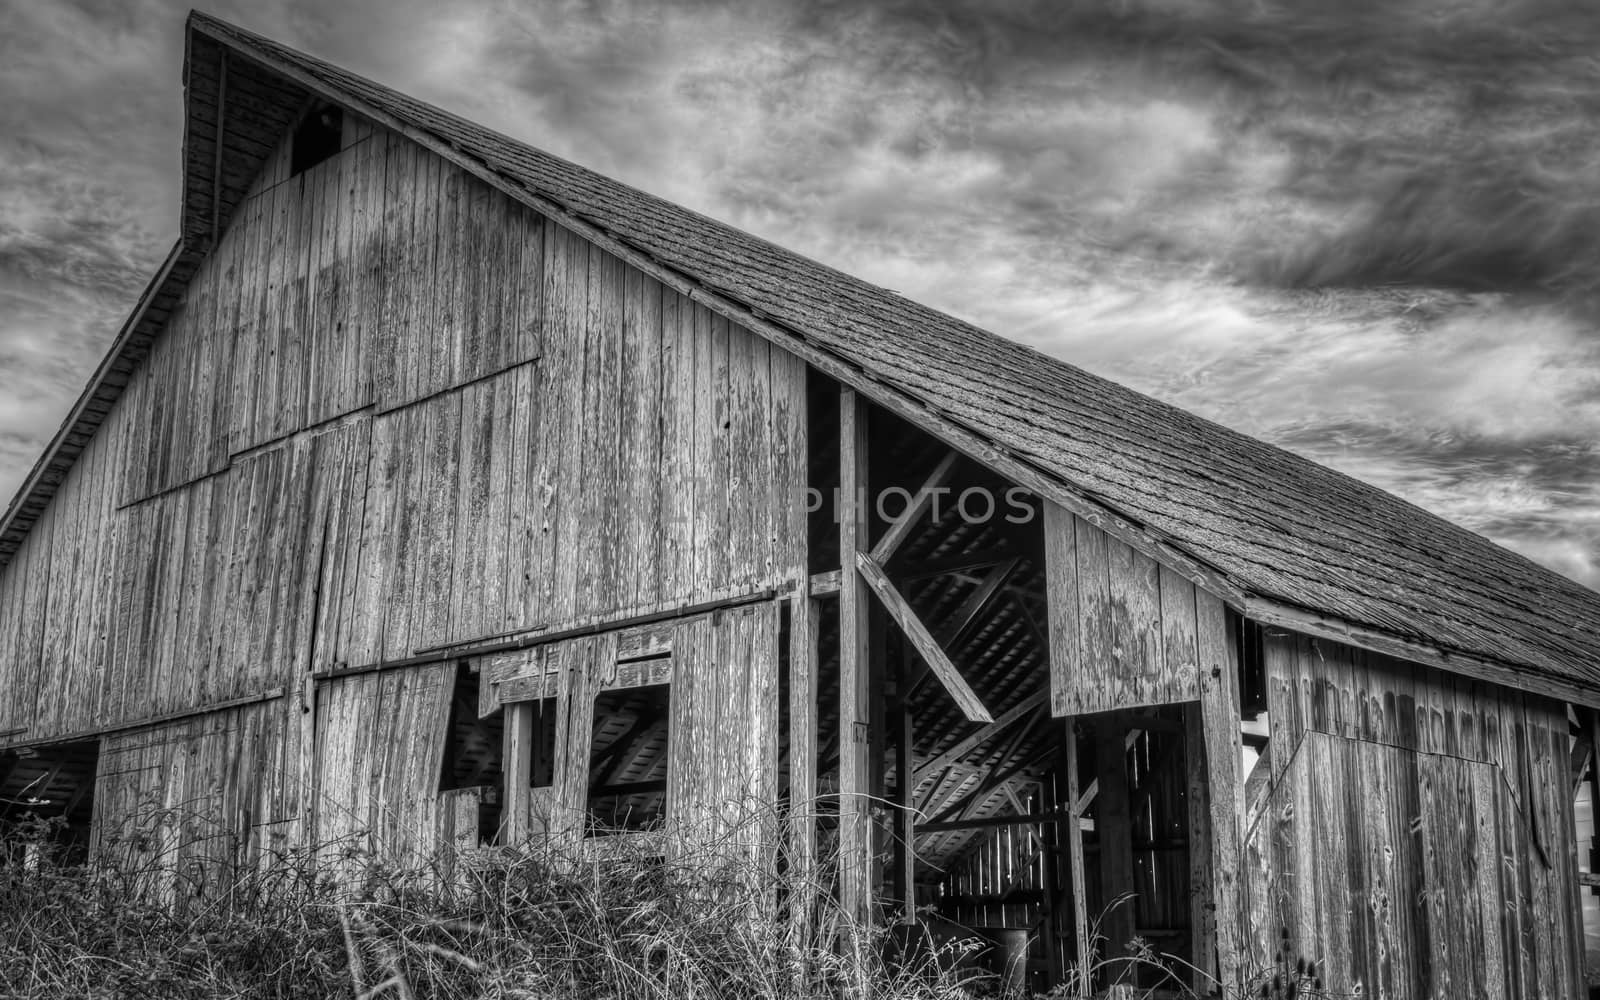 Abandoned Barn, Black and White Image, USA